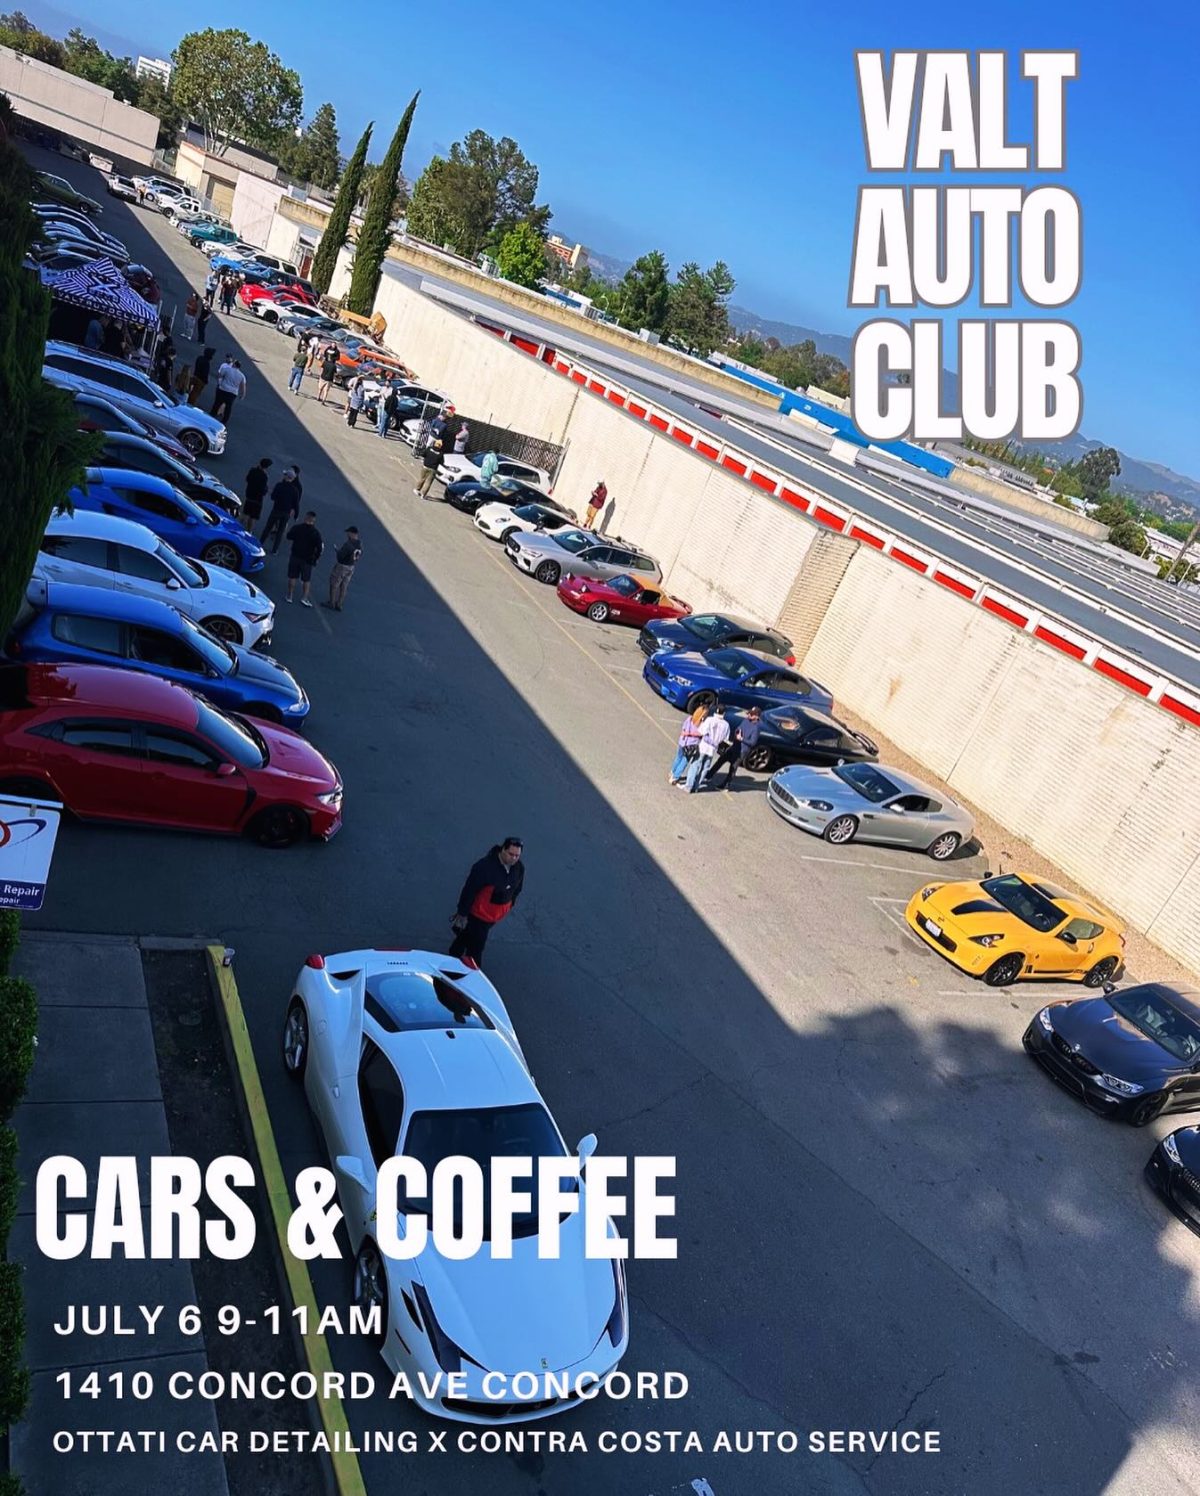 Valt Auto Club Cars & Coffee